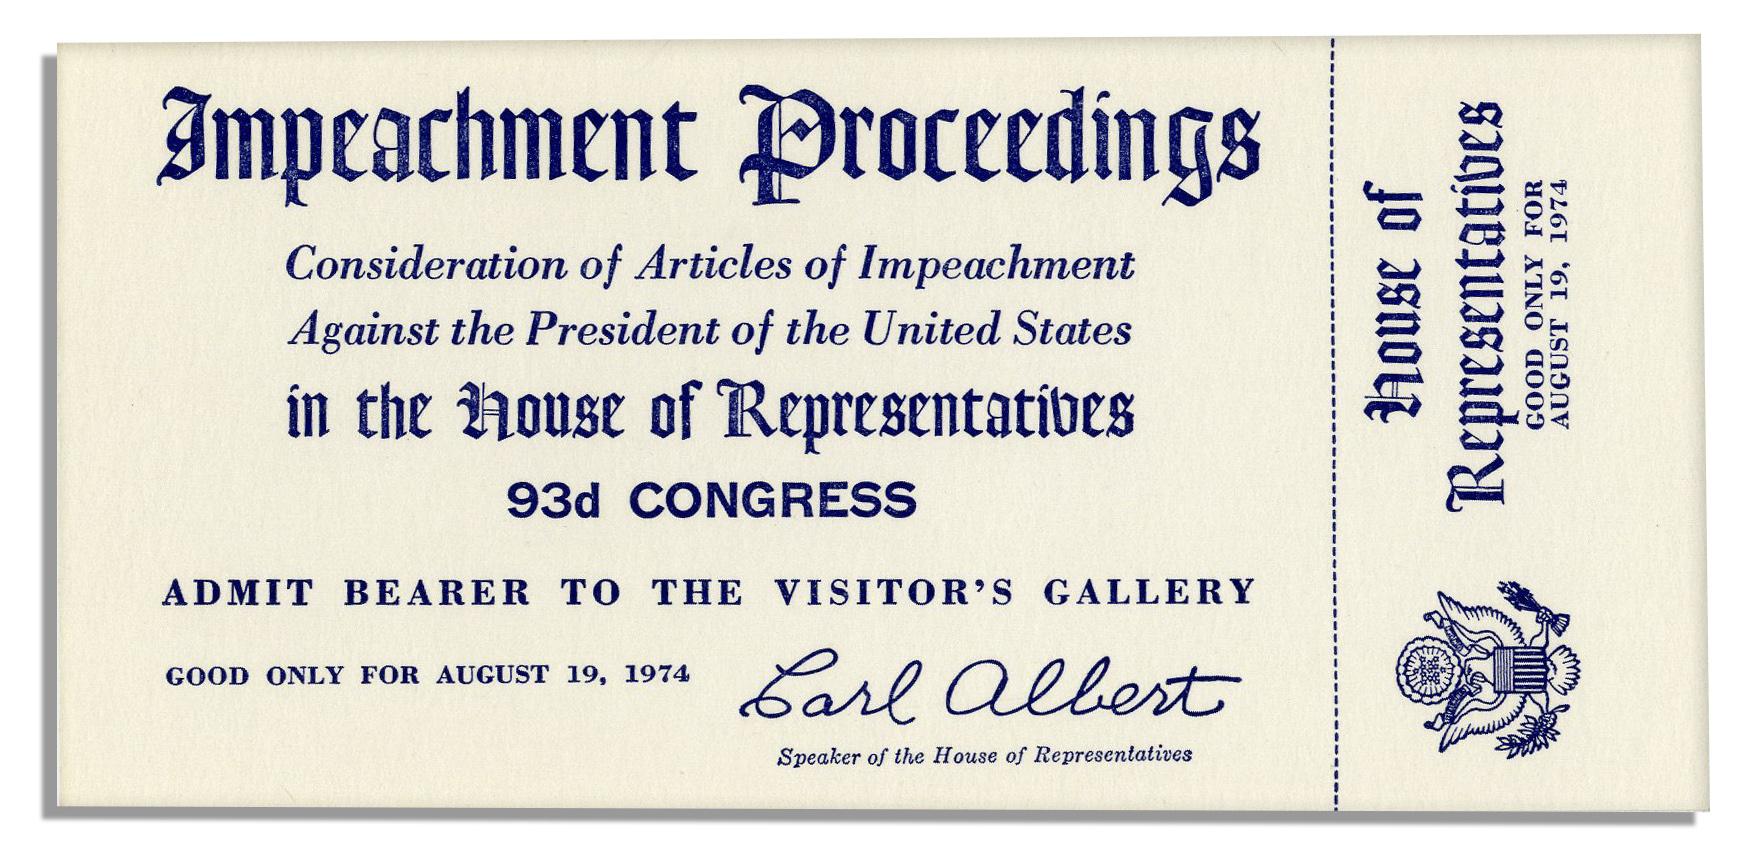 Richard Nixon Impeachment Trial Ticket -- Unused U.S. House Ticket to the Impeachment Trial Ticket